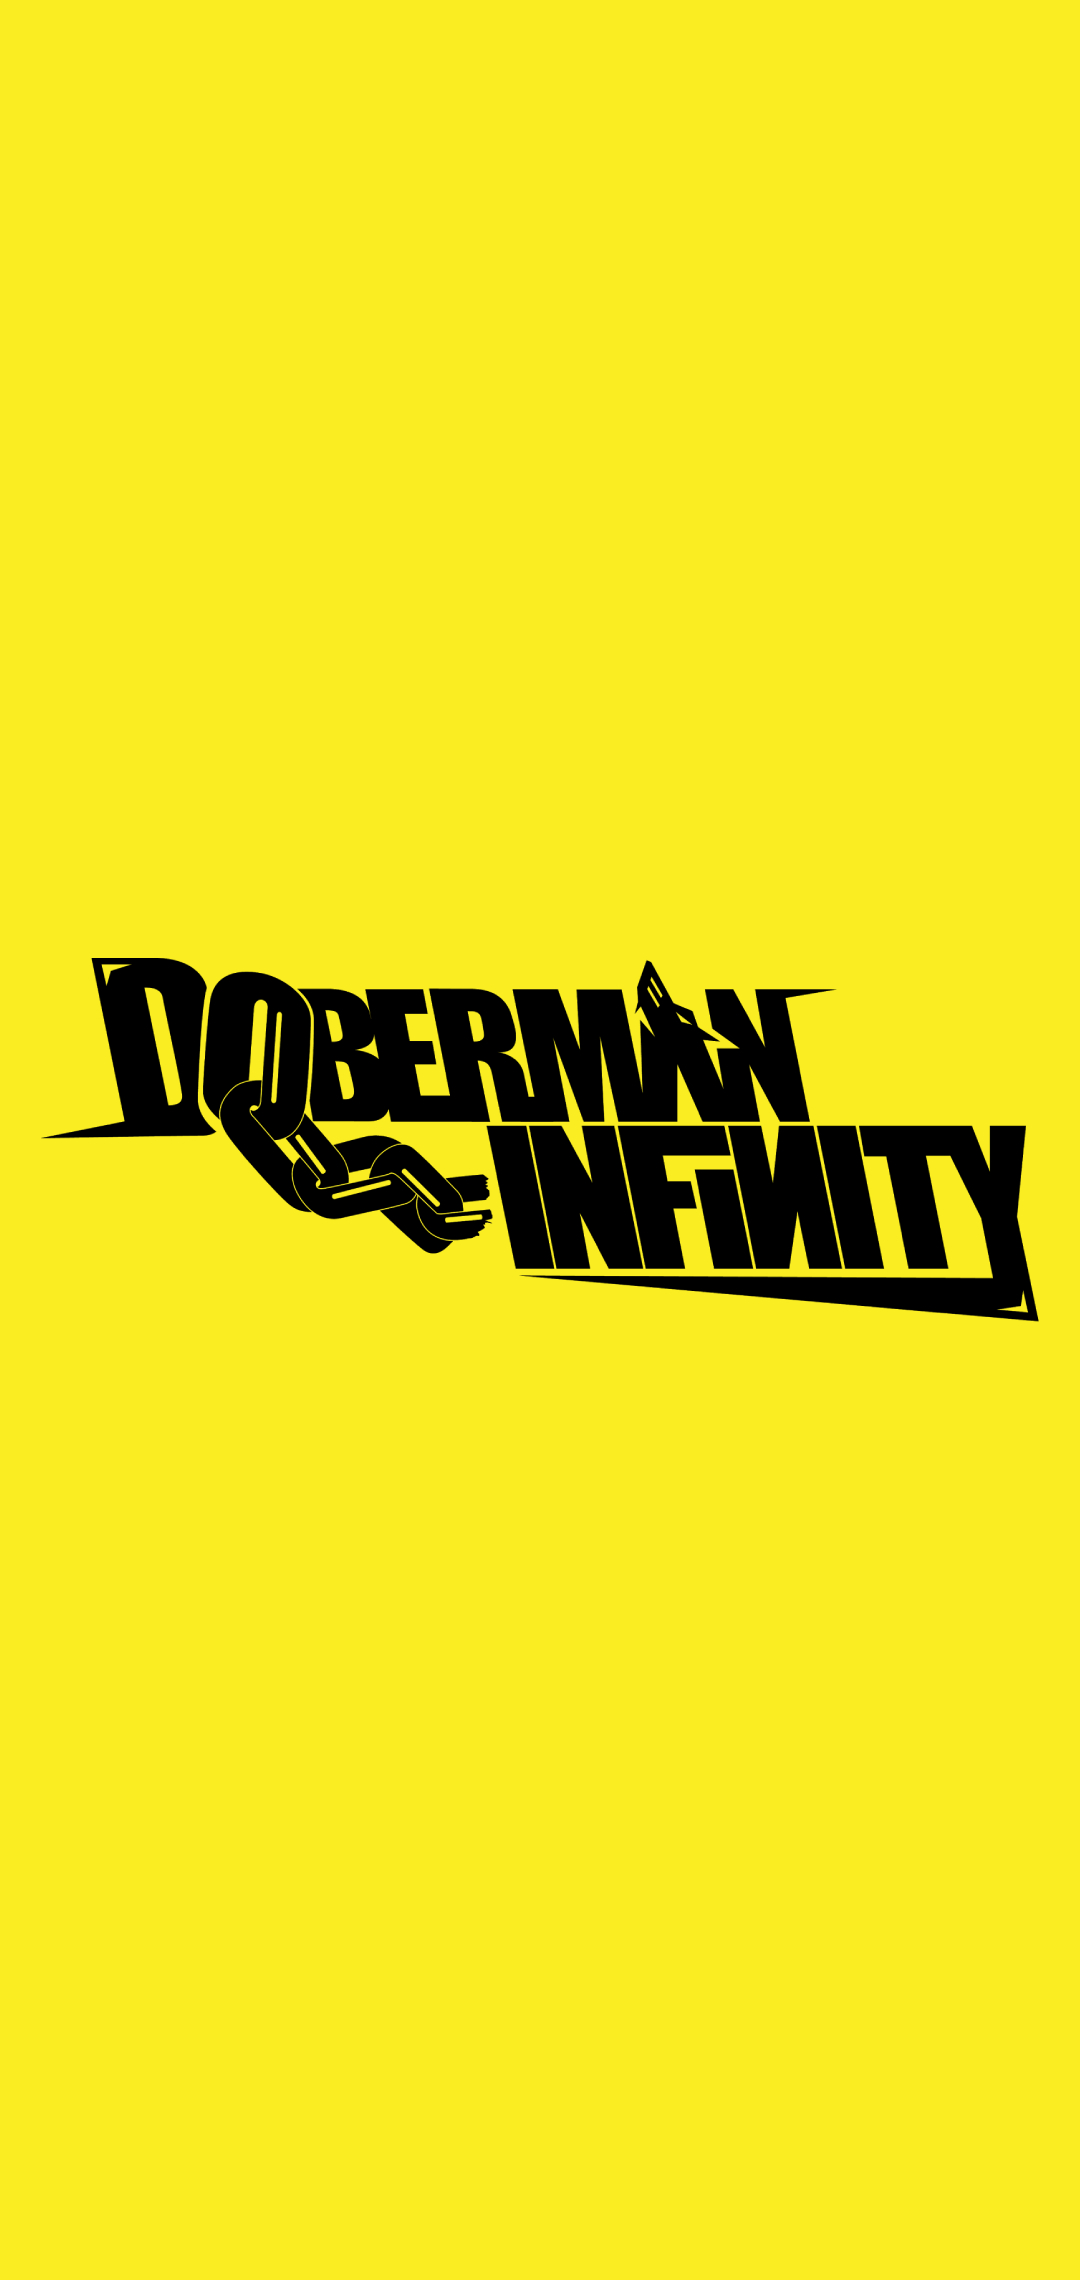 Doberman Infinity ロゴ Aquos Sense4 スマホ壁紙 待ち受け スマラン